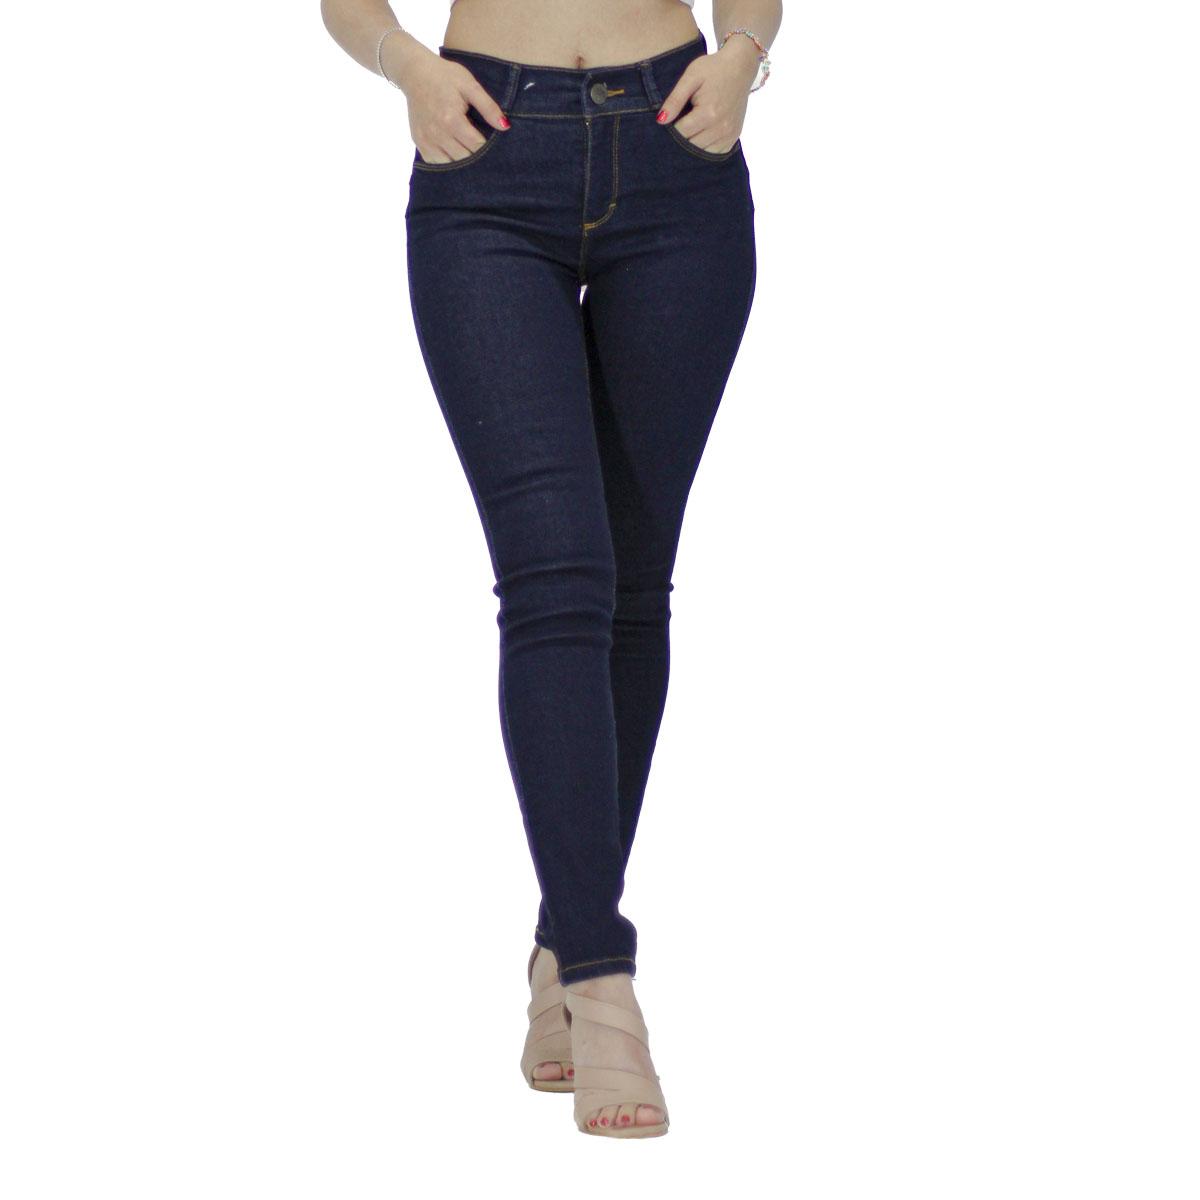 Jeans Magic Cintura Alta Skinny / color azul oscuro